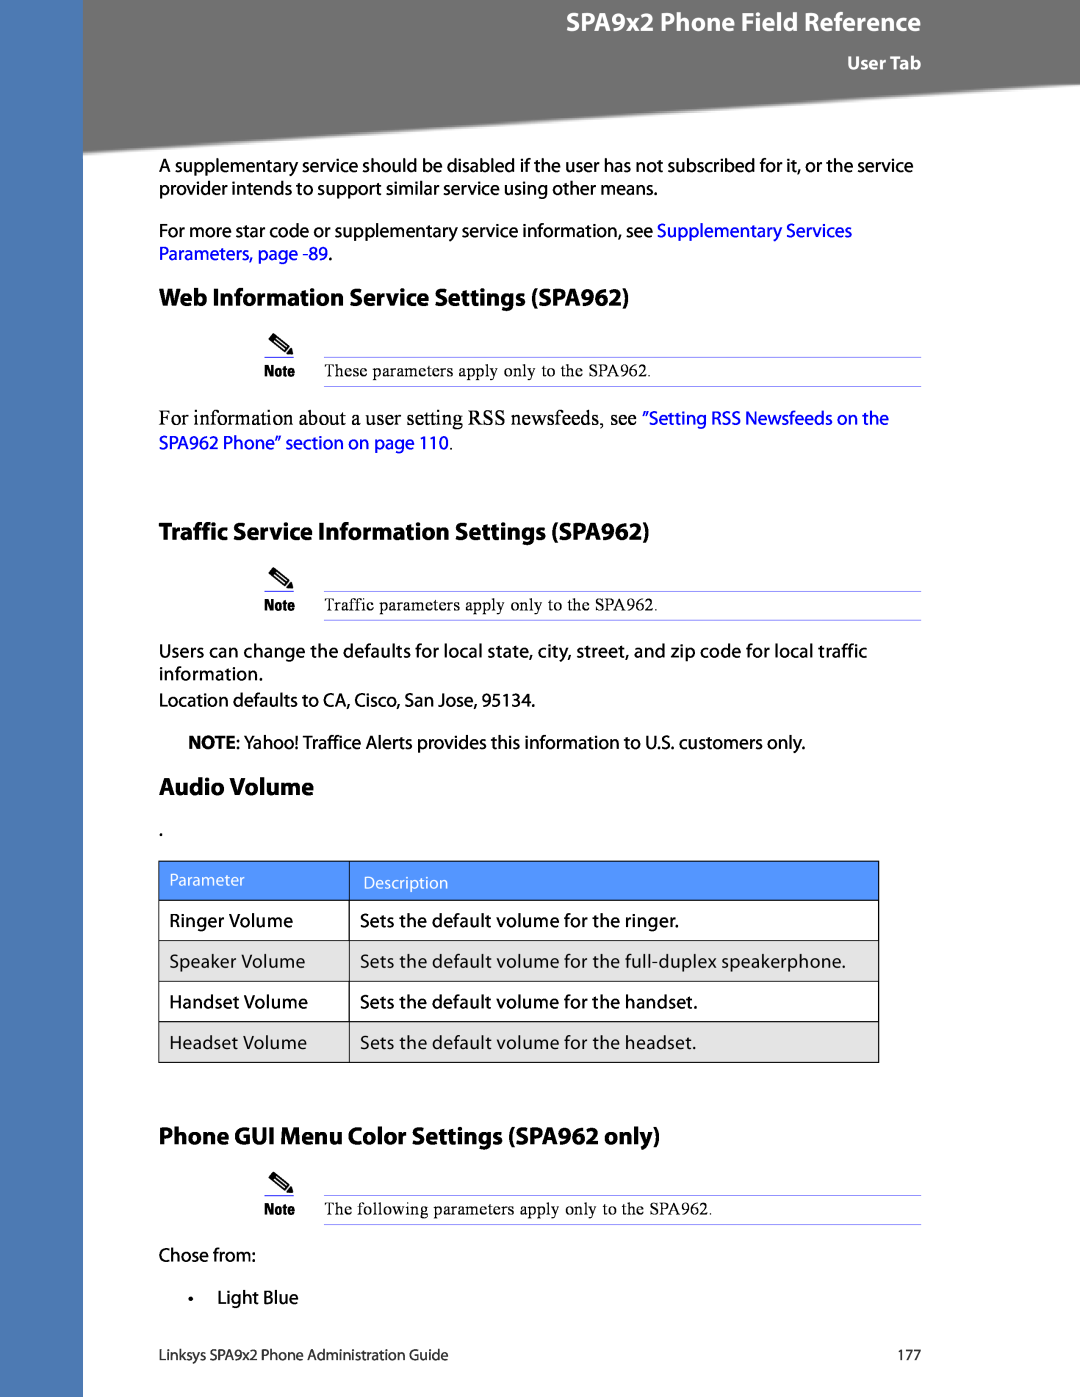 Linksys Web Information Service Settings SPA962, Traffic Service Information Settings SPA962, Audio Volume, User Tab 